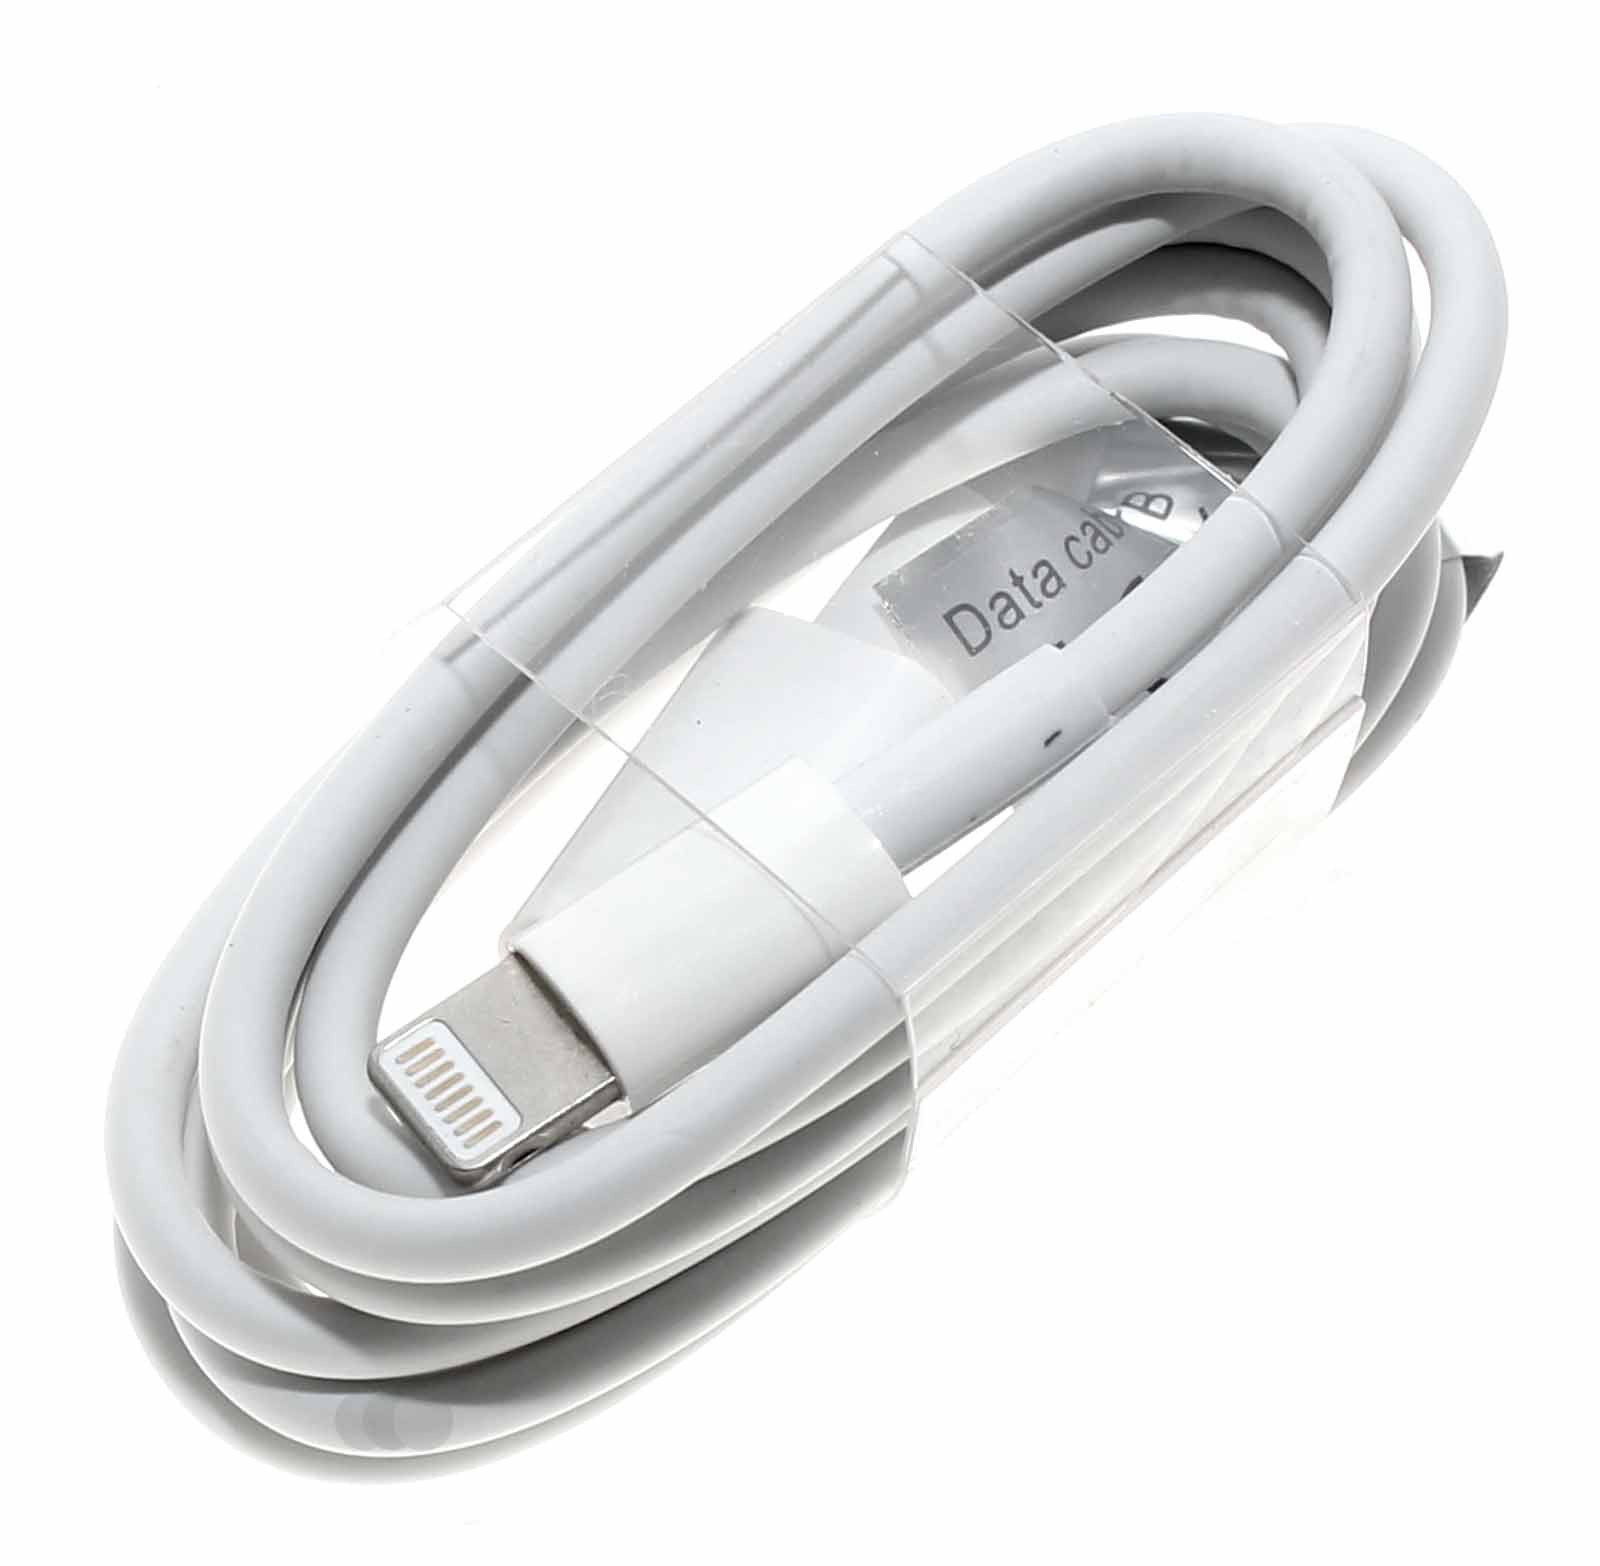 1m Ladekabel Datenkabel Apple Lightning Stecker auf USB-C Stecker, iPhone, iPad, iPod